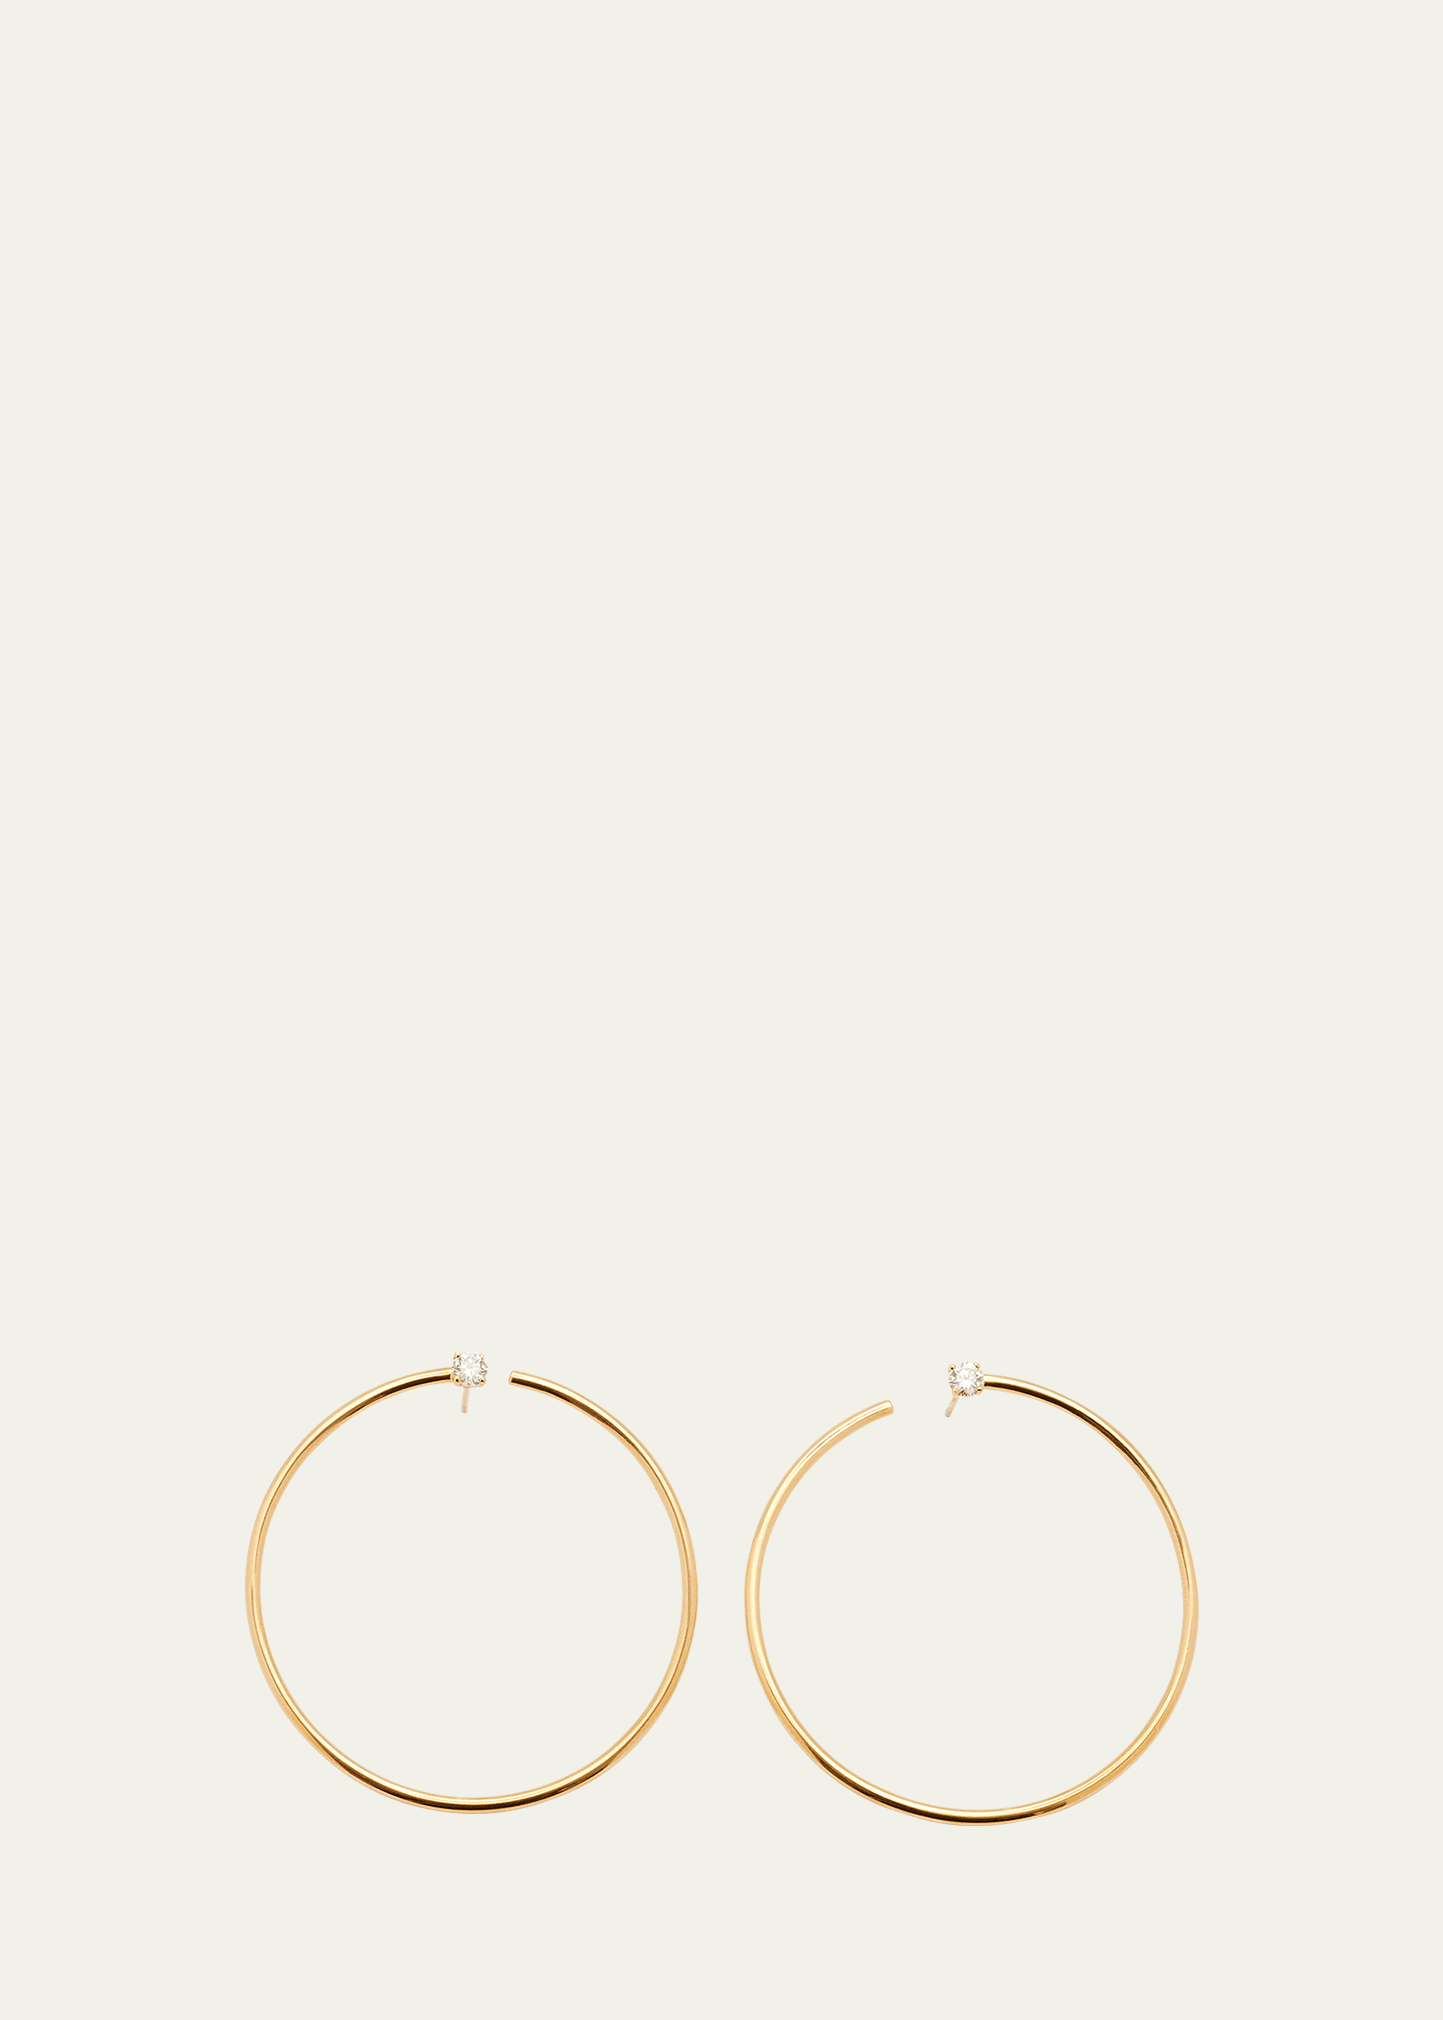 Bardot Diamond-Stud Wire Circle Hoop Earrings in 18k Yellow Gold